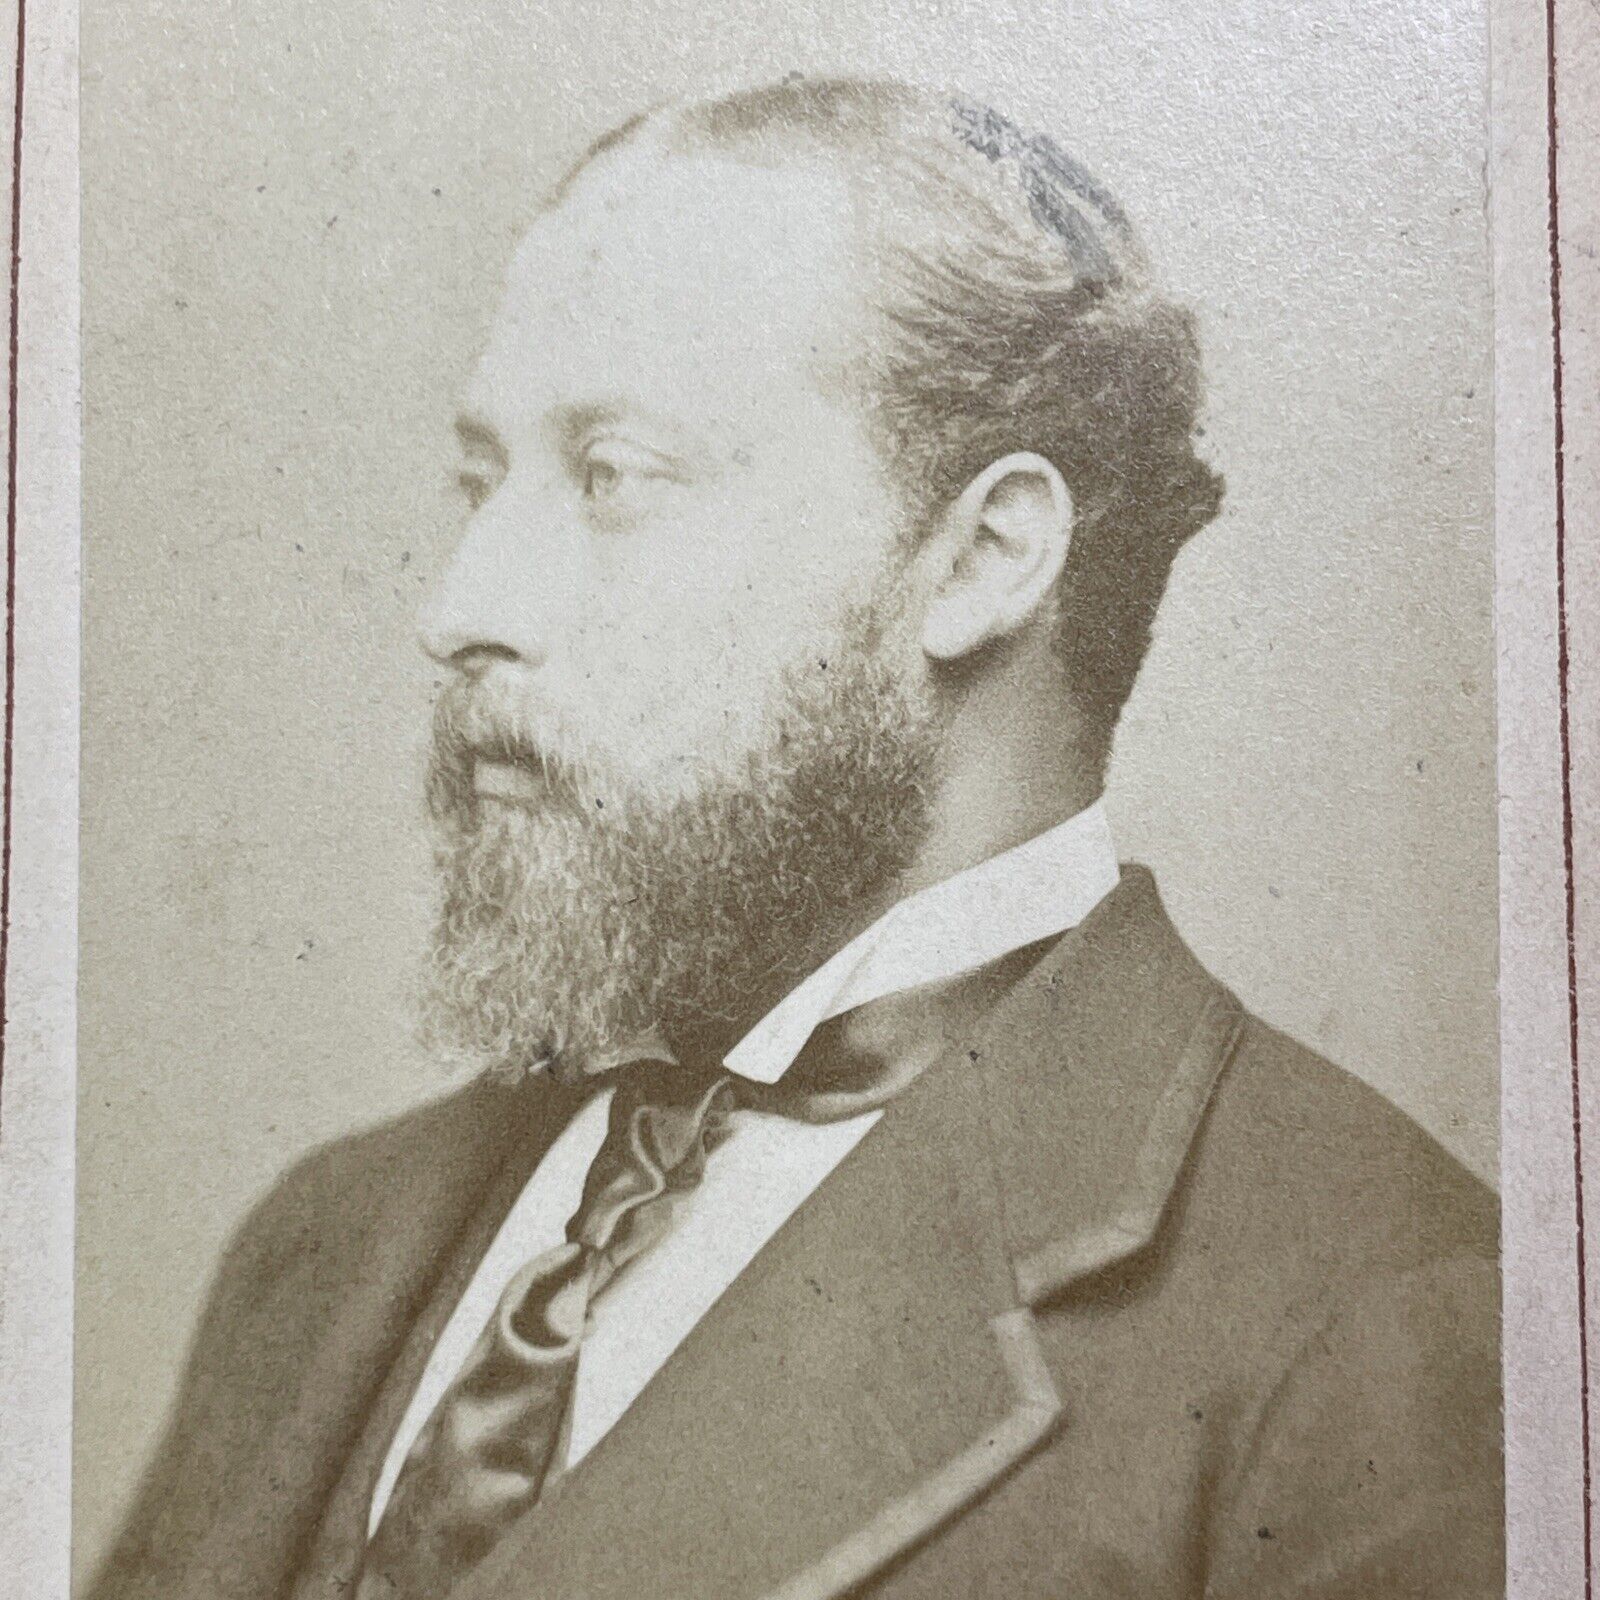 Antique 1870s King Edward VII While Still Prince Of Wales Photo CDV Card V2237